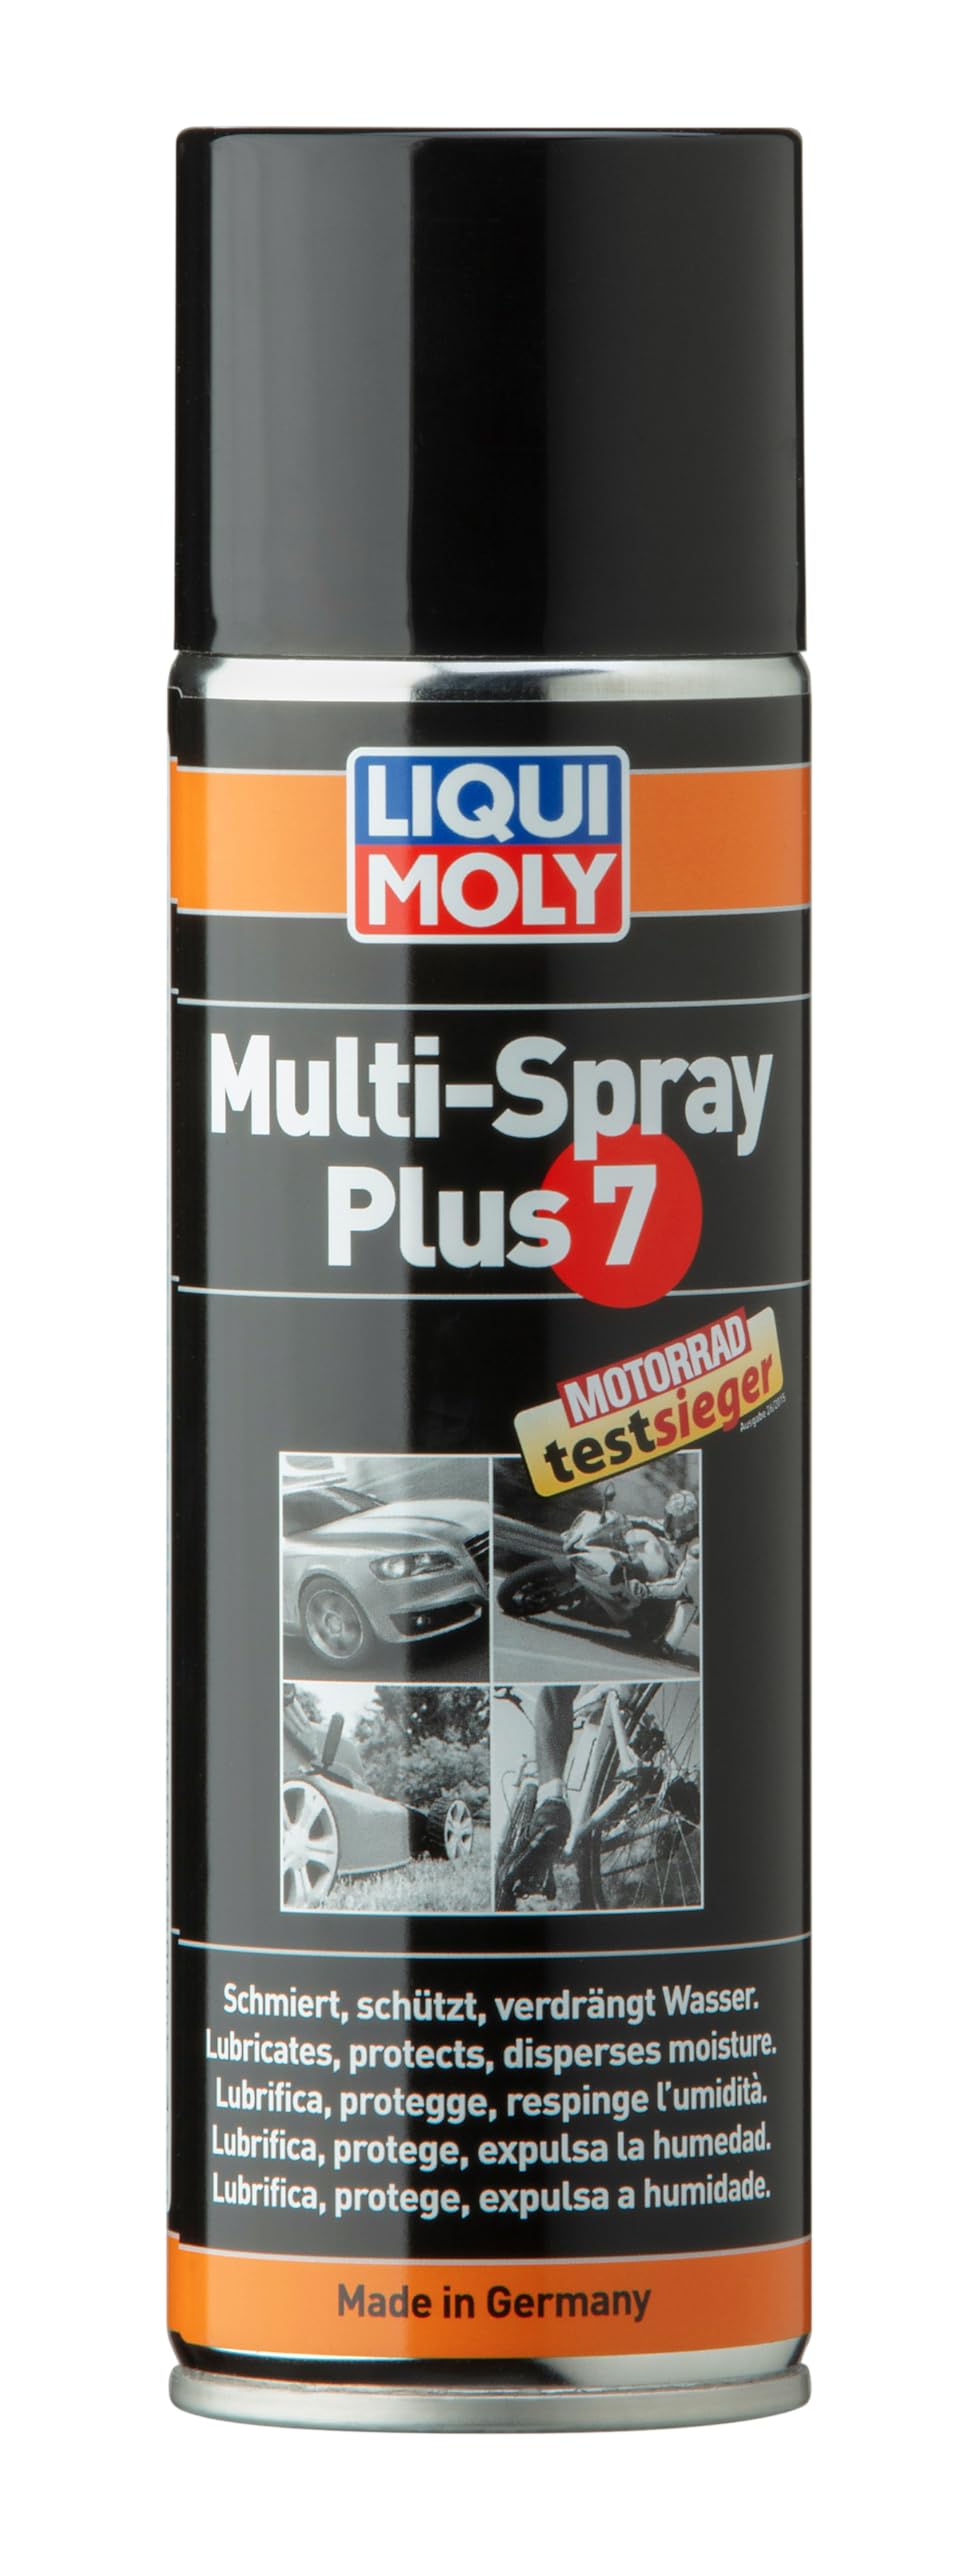 LIQUI MOLY Multi-Spray Plus 7 | 300 ml | Korrosionsschutz | Rostlöser | Art.-Nr.: 3304 von Liqui Moly